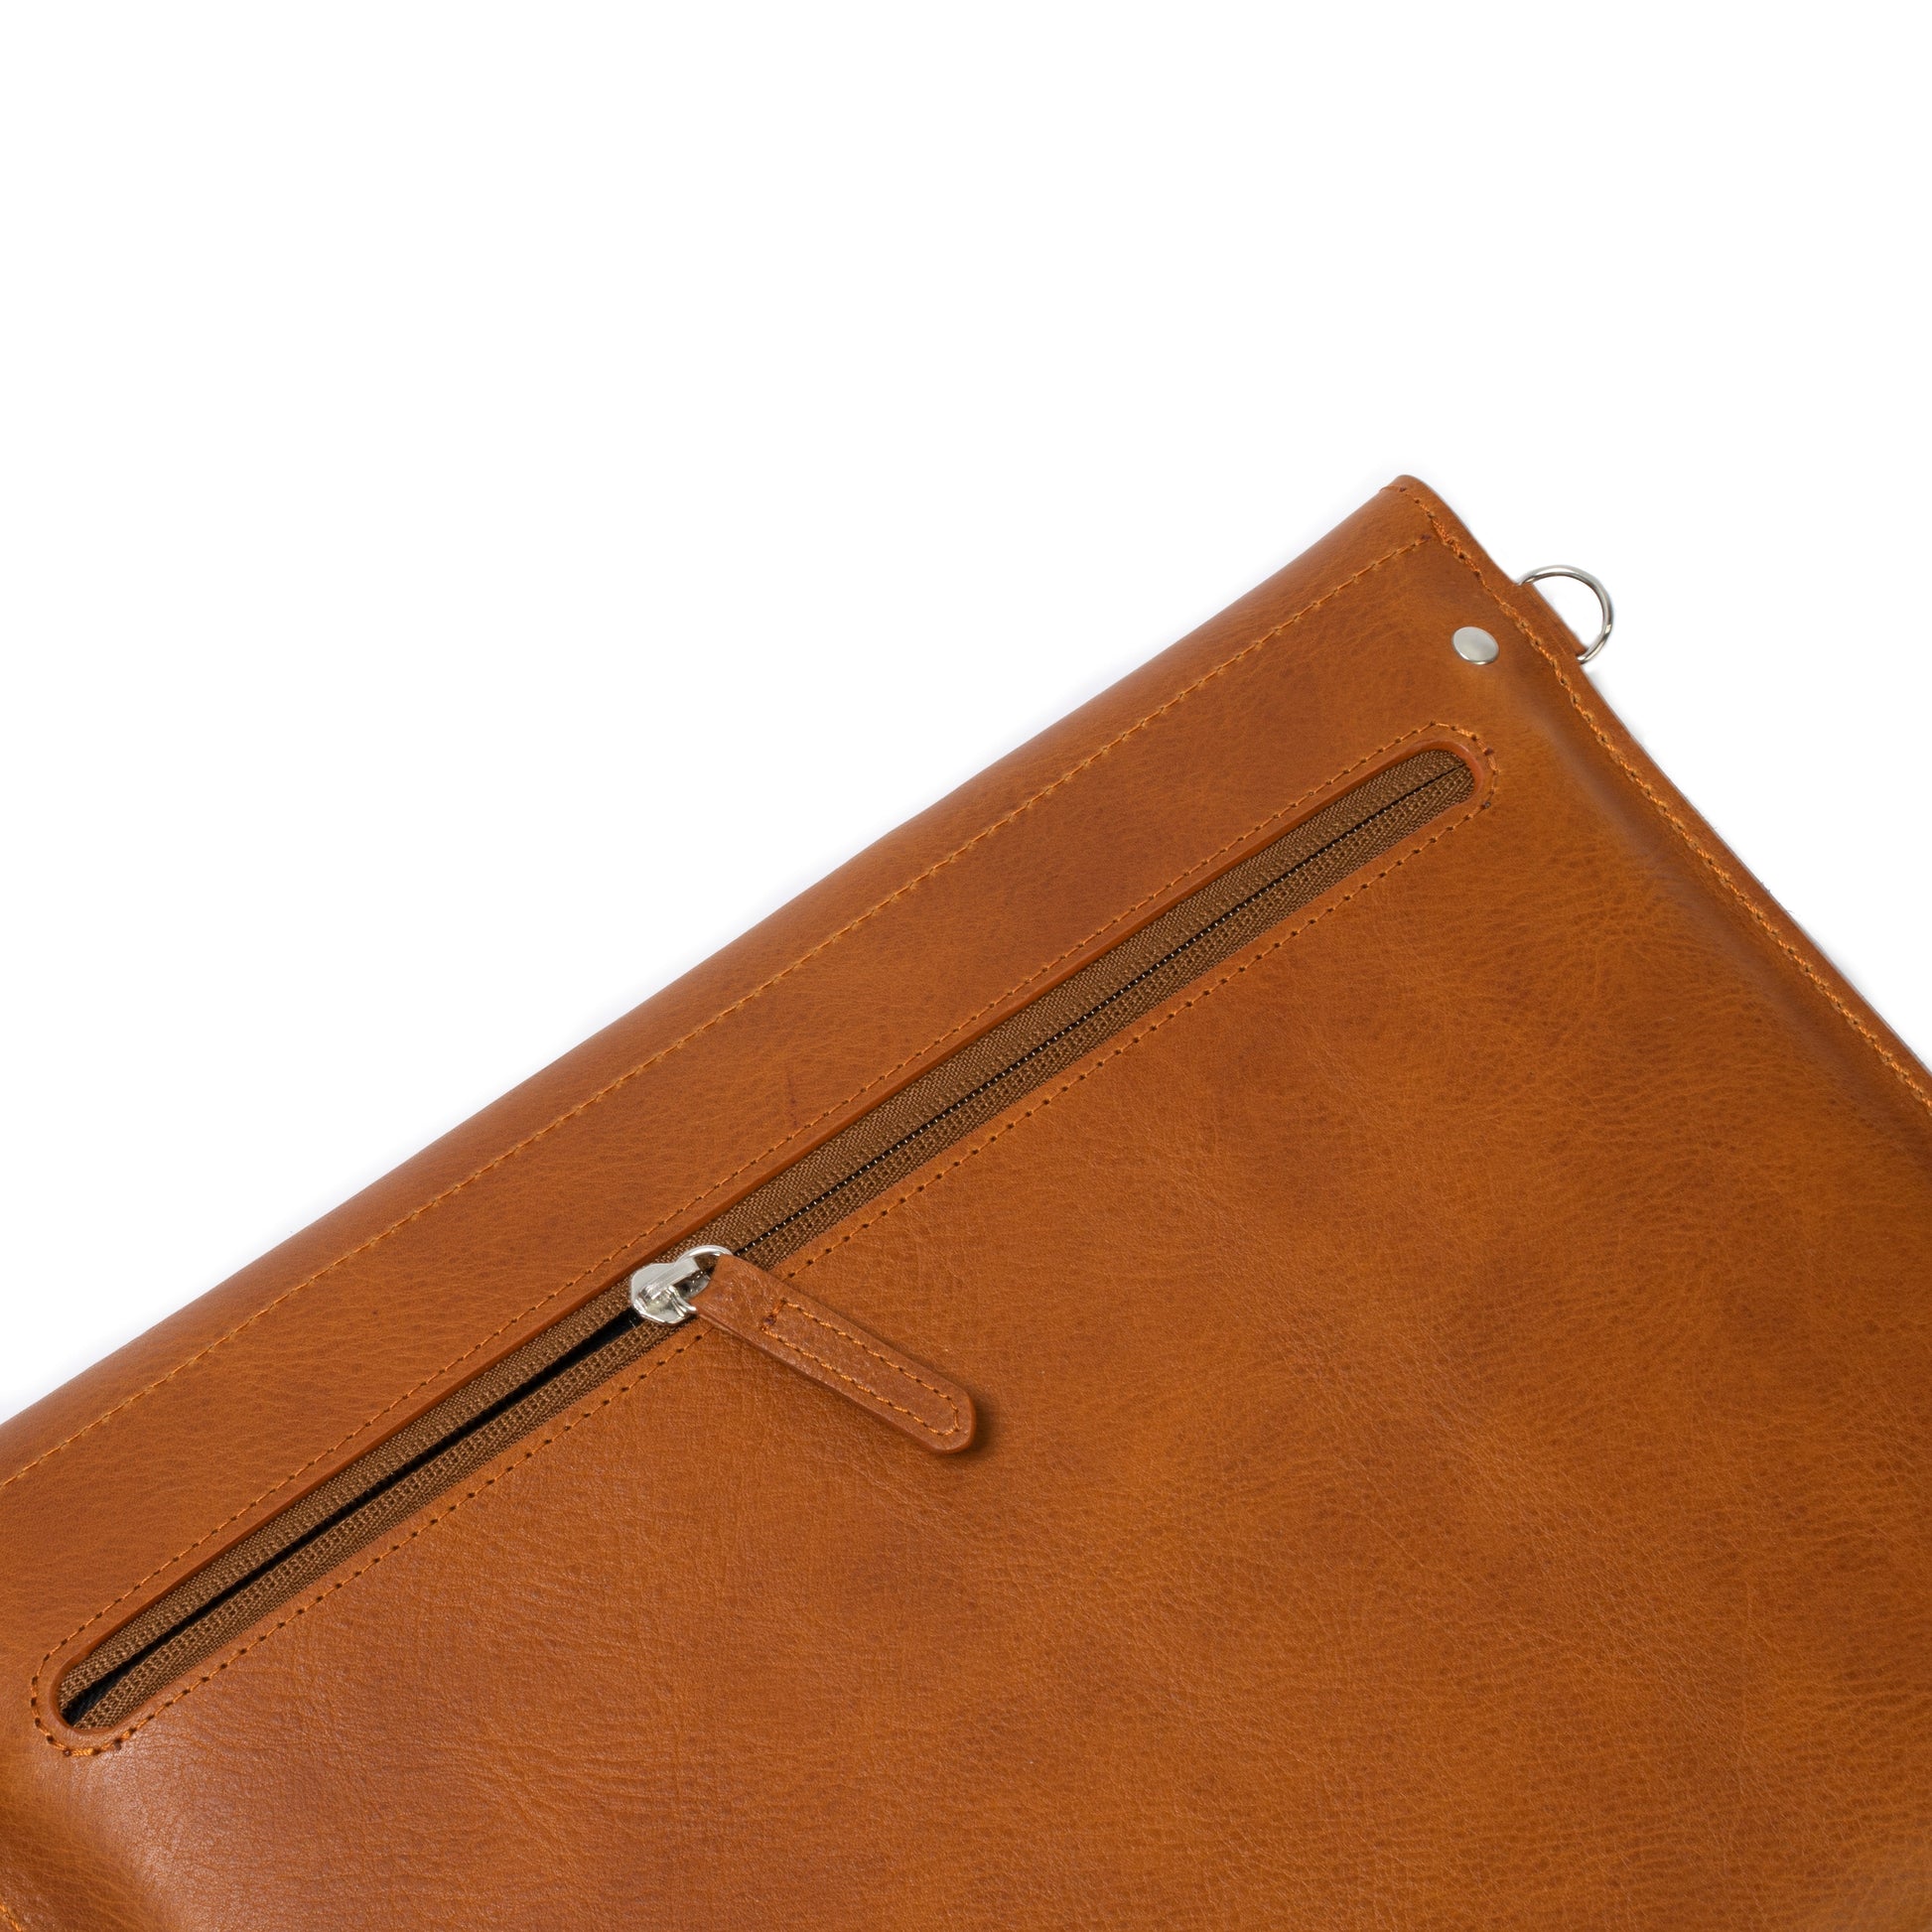 Leather Bag for iPad - The Minimalist 2.0-2